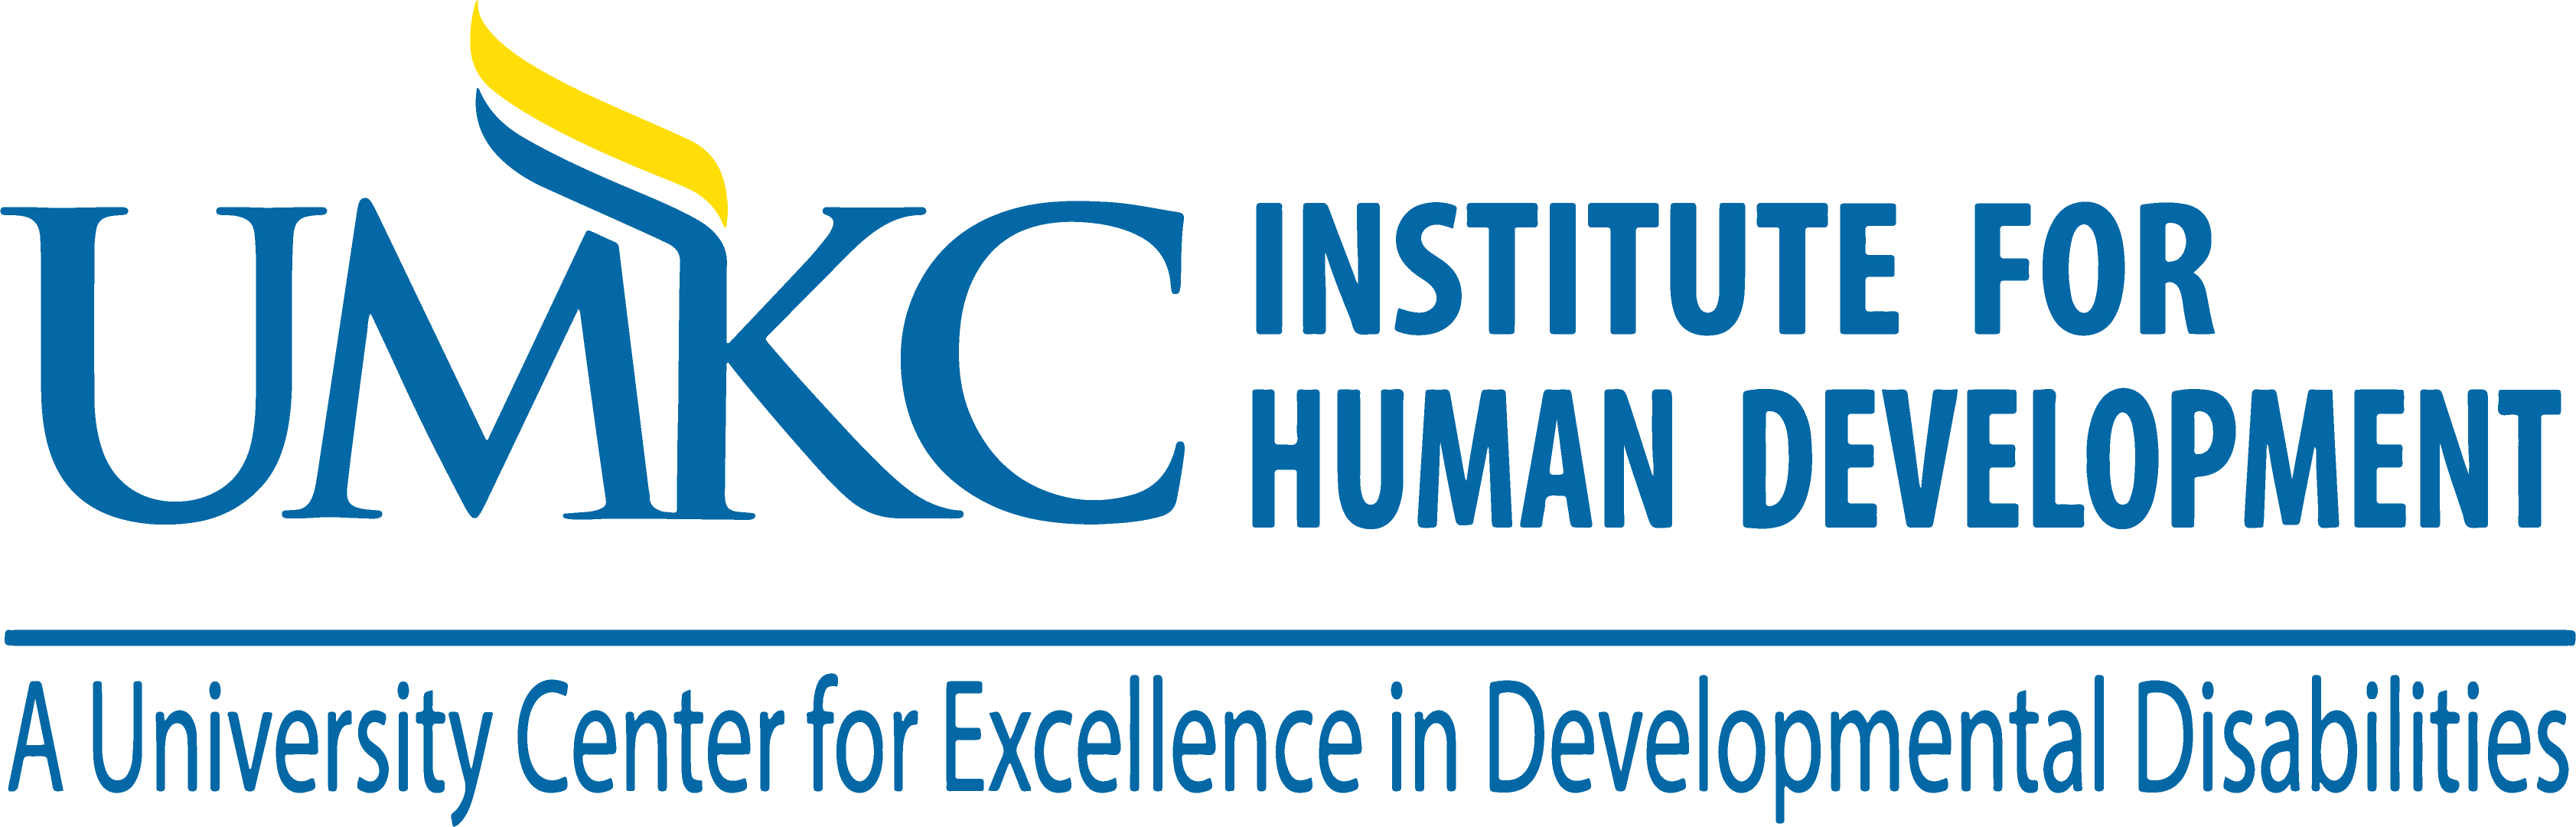 UMKC Institute for Human Development (UCE)